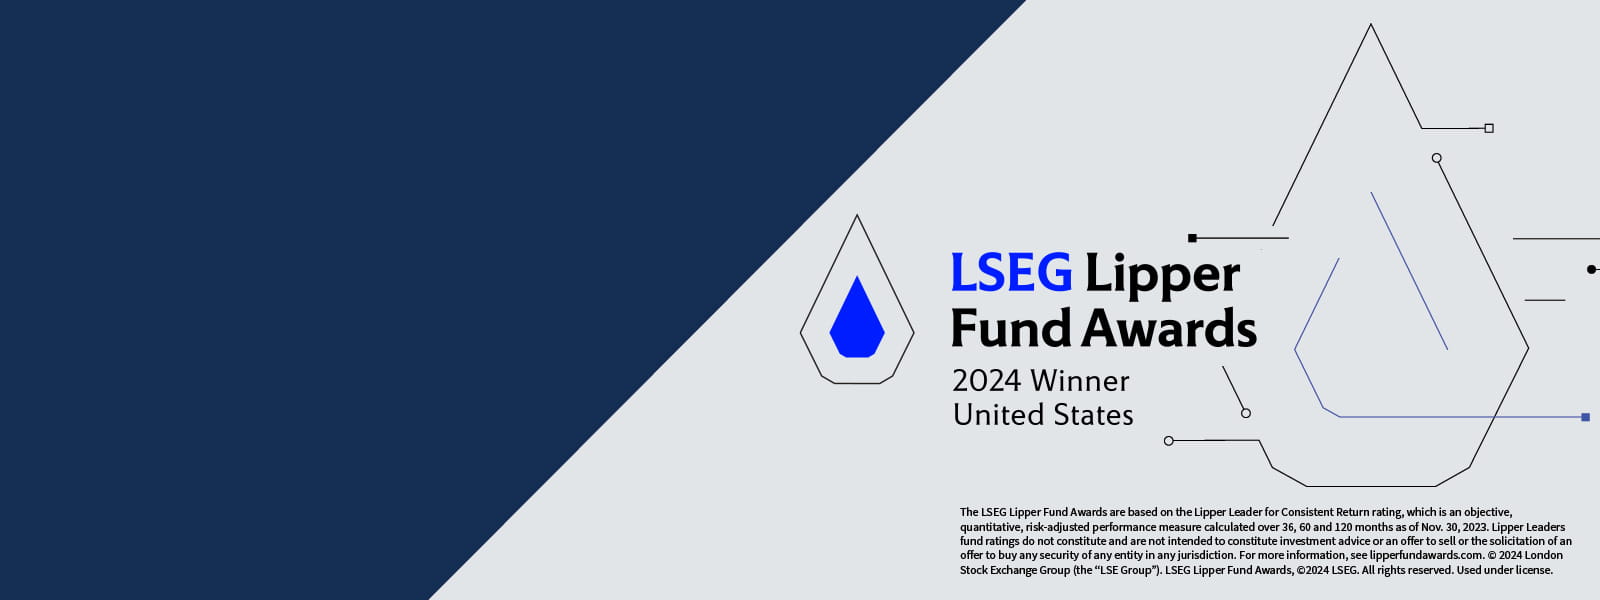 LSEG Lipper Fund Awards 2024 Winner United States